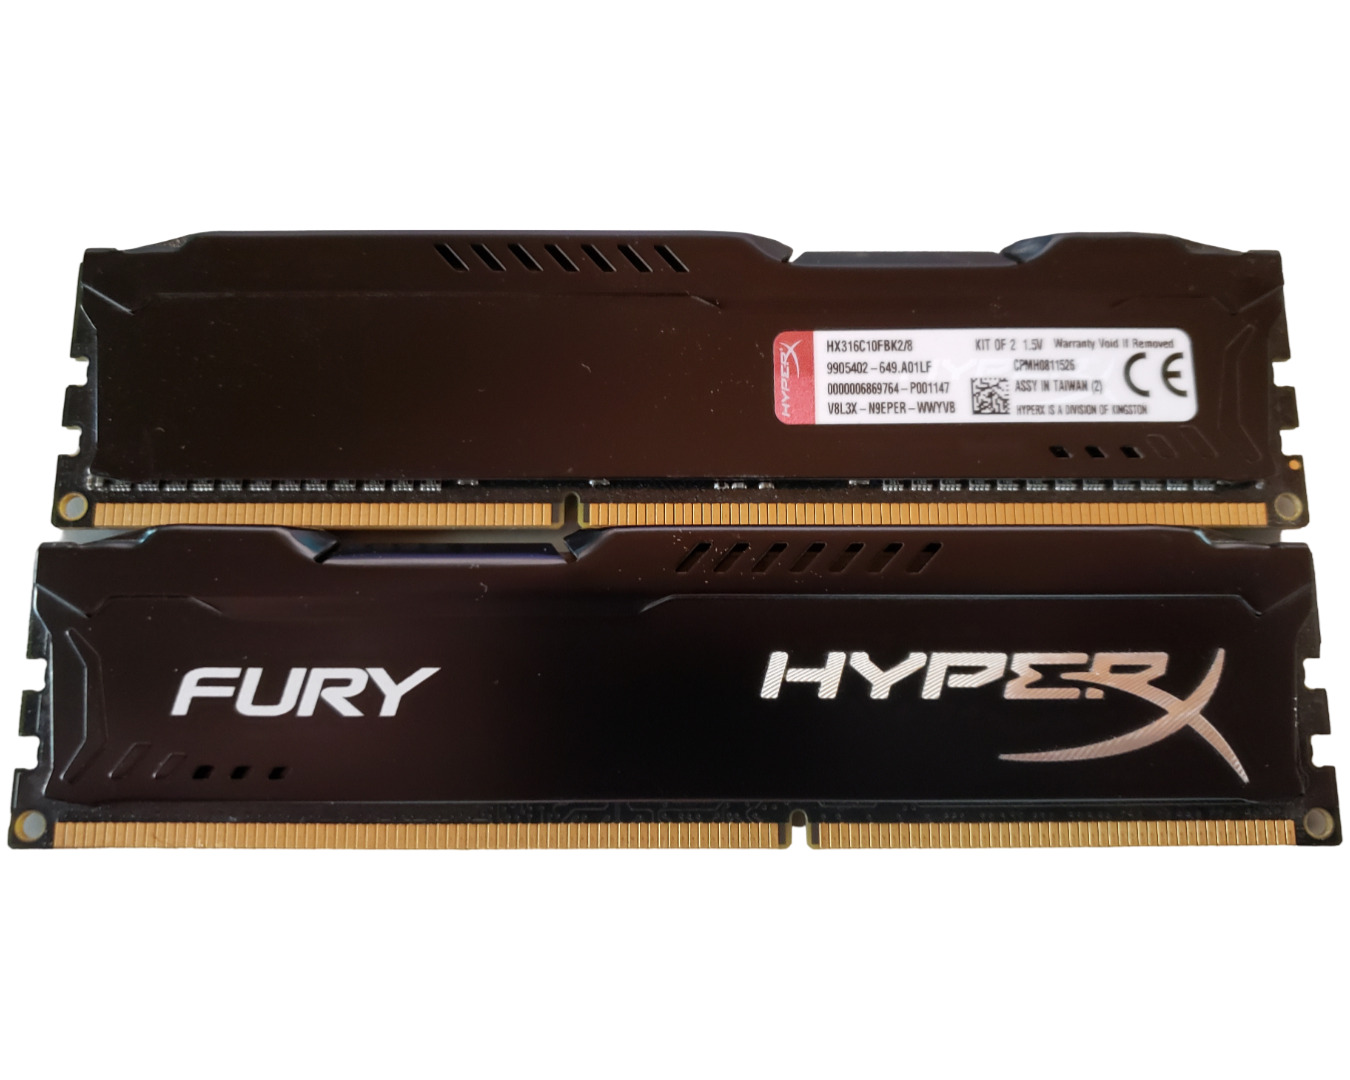 (2 Piece) Kingston HyperX Fury HX316C10FBK2/8 DDR3-1600 8GB (2x4GB) Memory